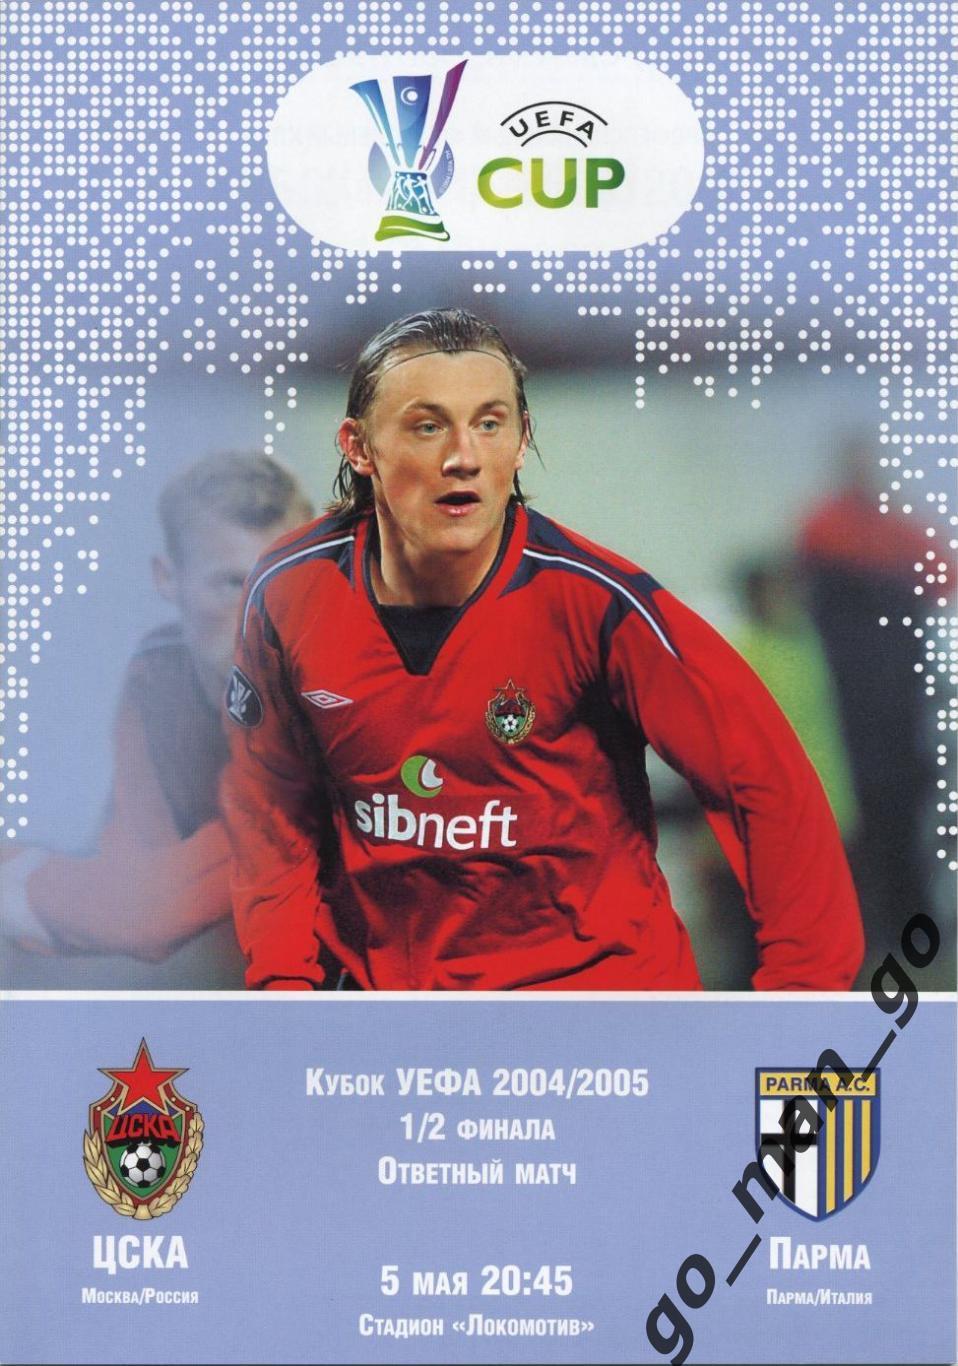 ЦСКА Москва – ПАРМА Италия 05.05.2005, кубок УЕФА, 1/2 финала.